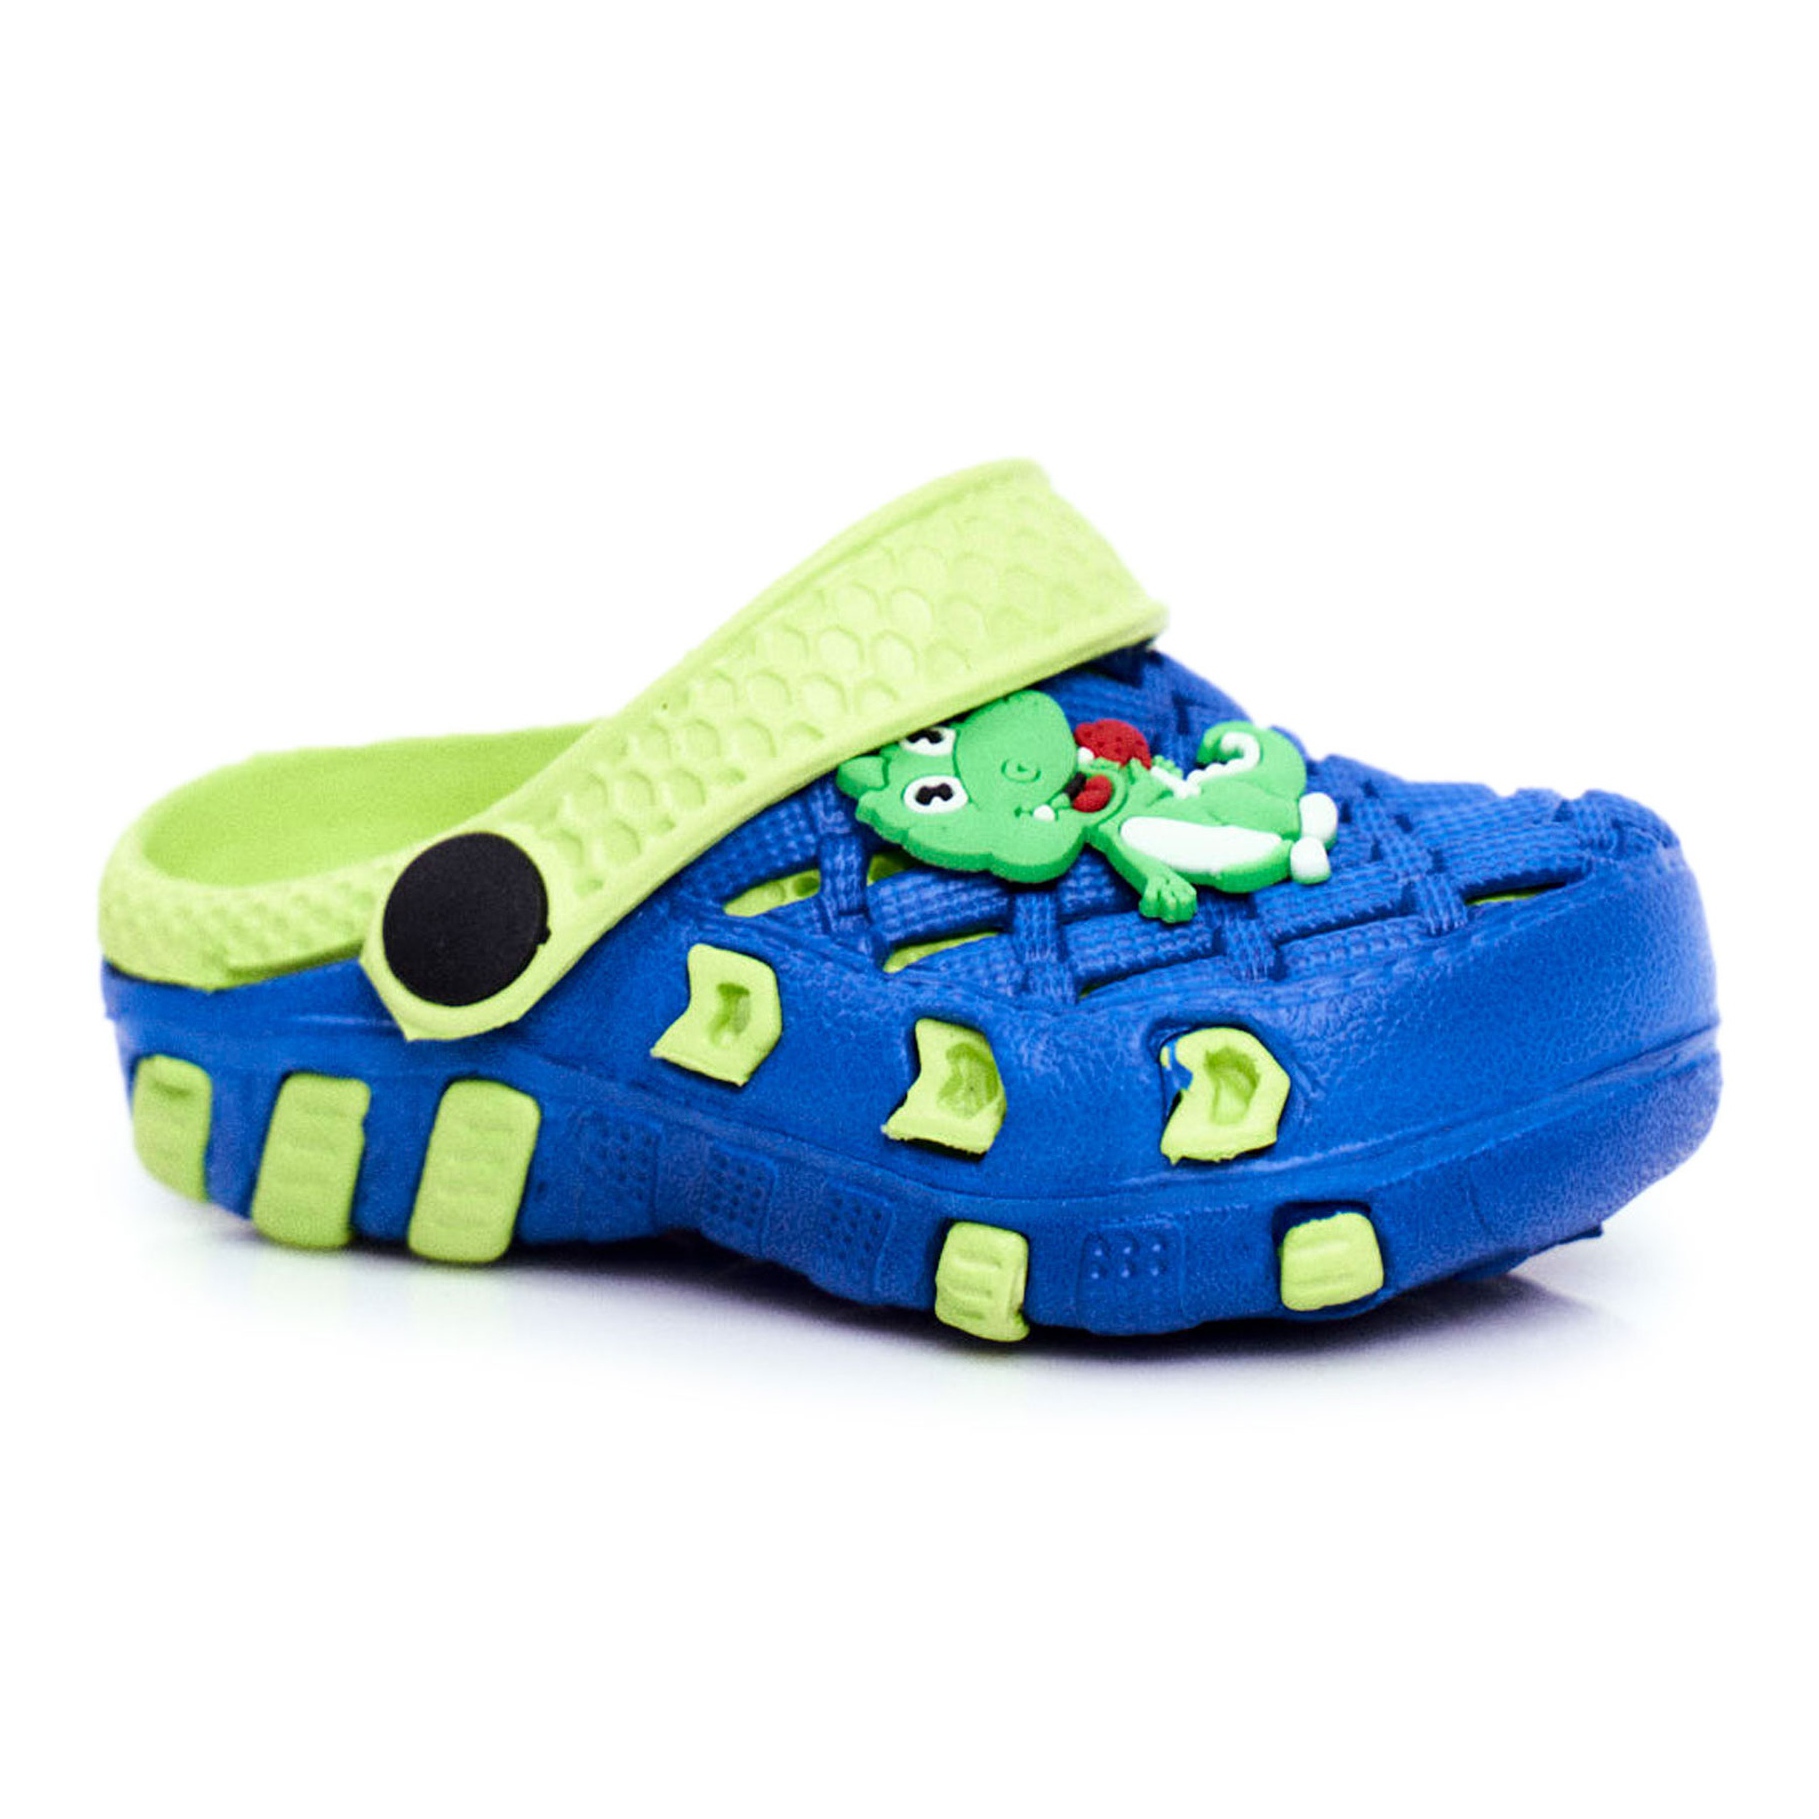 Children's Slippers Foam Crocs Navy Blue Crocodile Casper yellow - KeeShoes